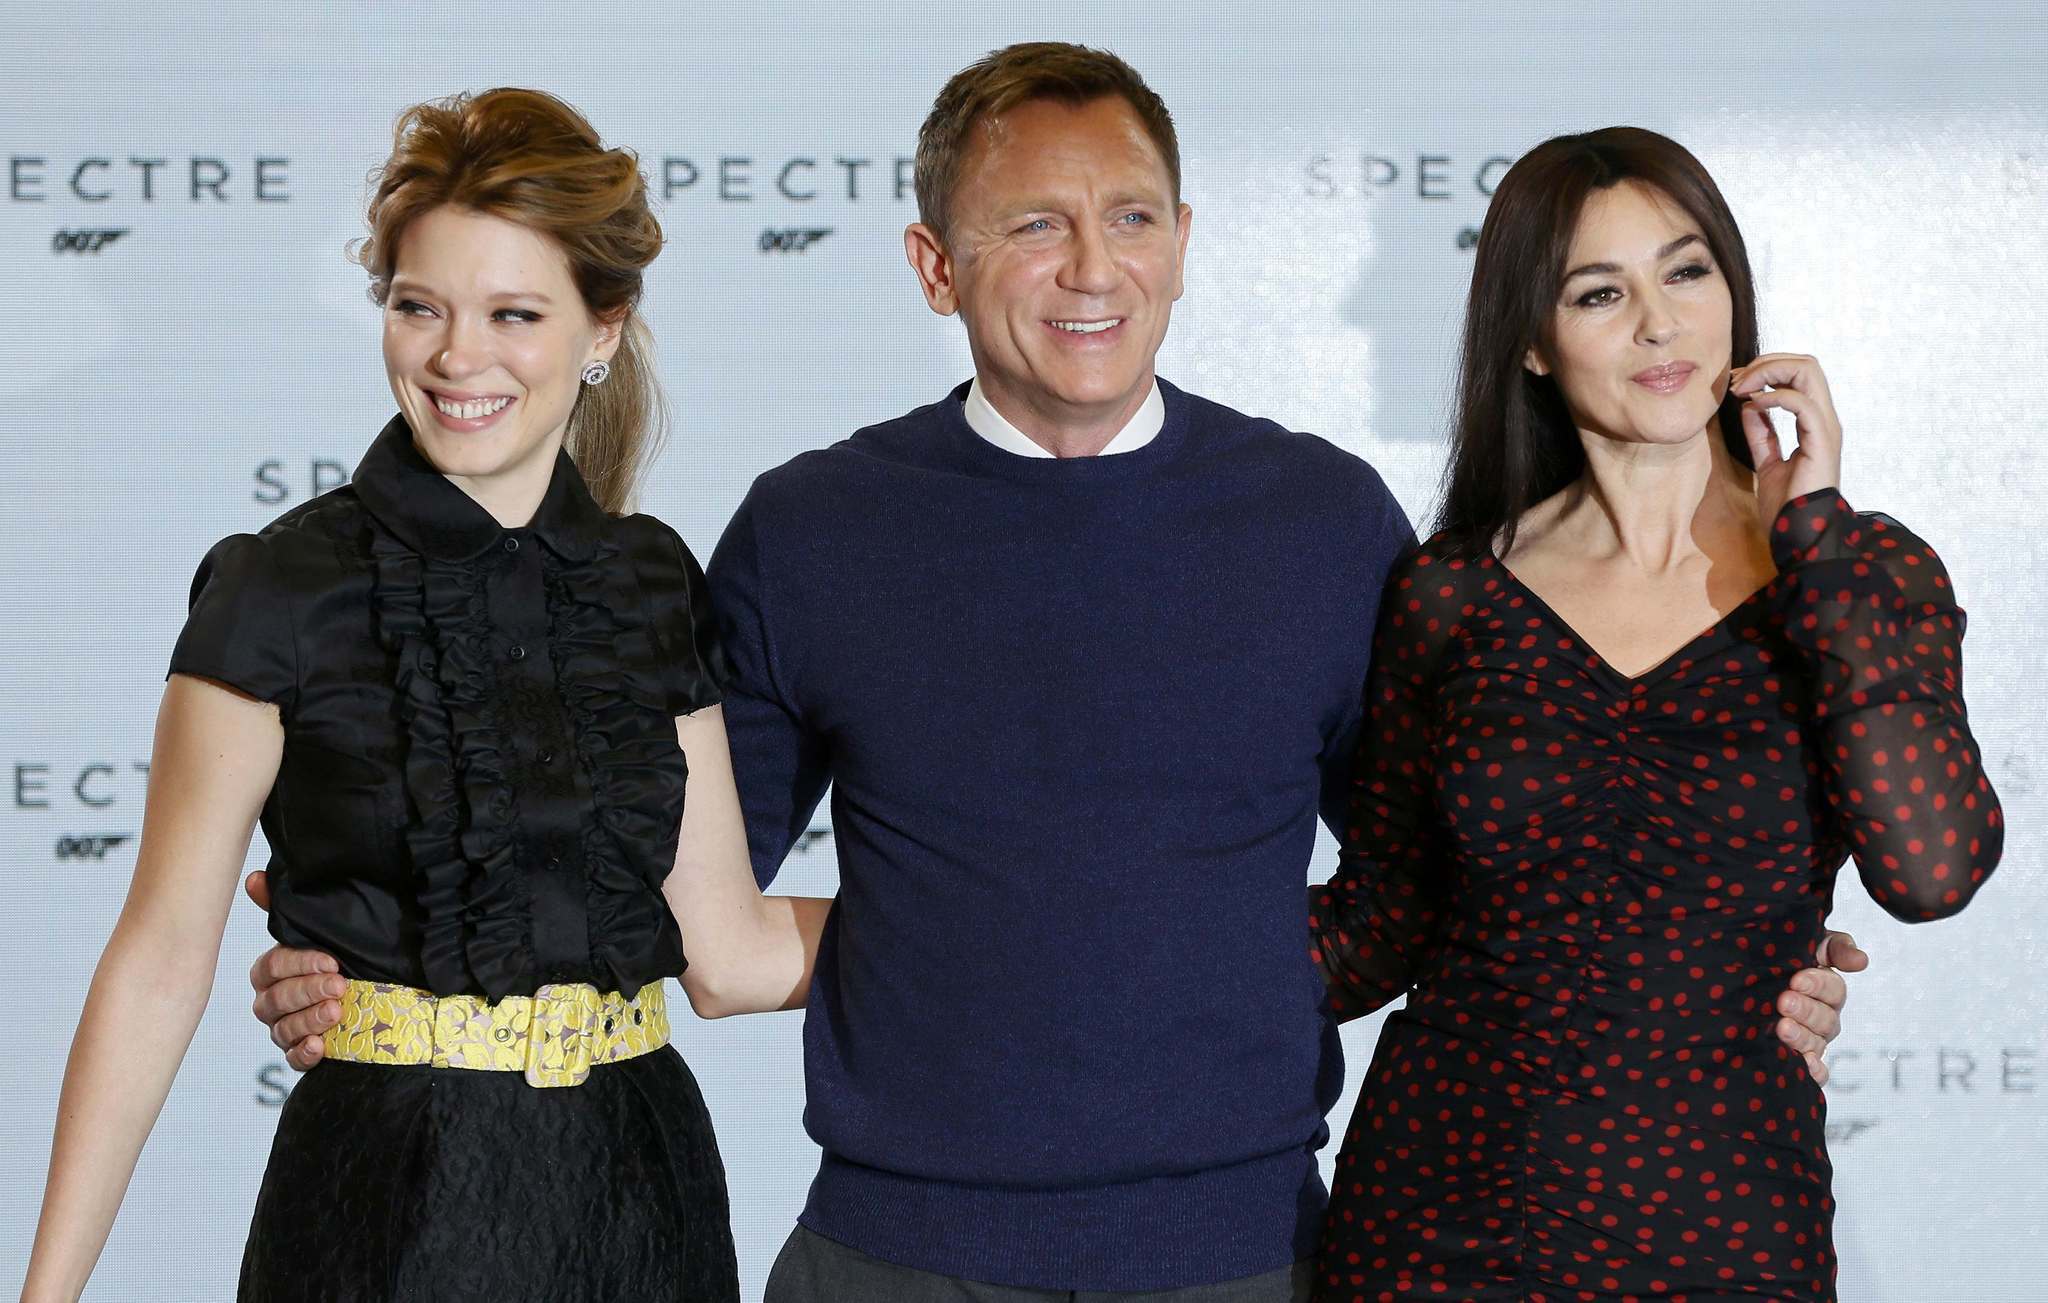 Next James Bond movie titled 'Spectre,' new cast members revealed ...